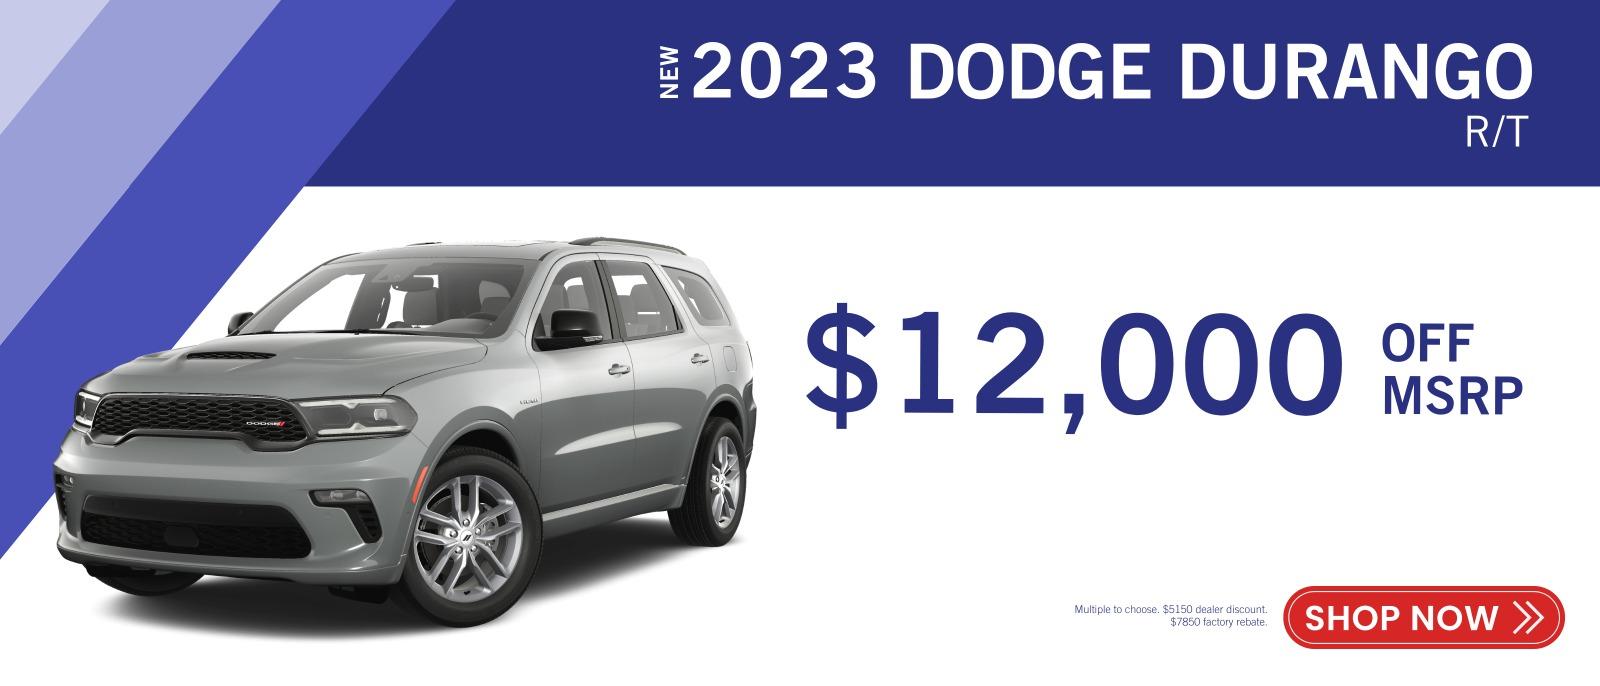 New 2023 Dodge Durango